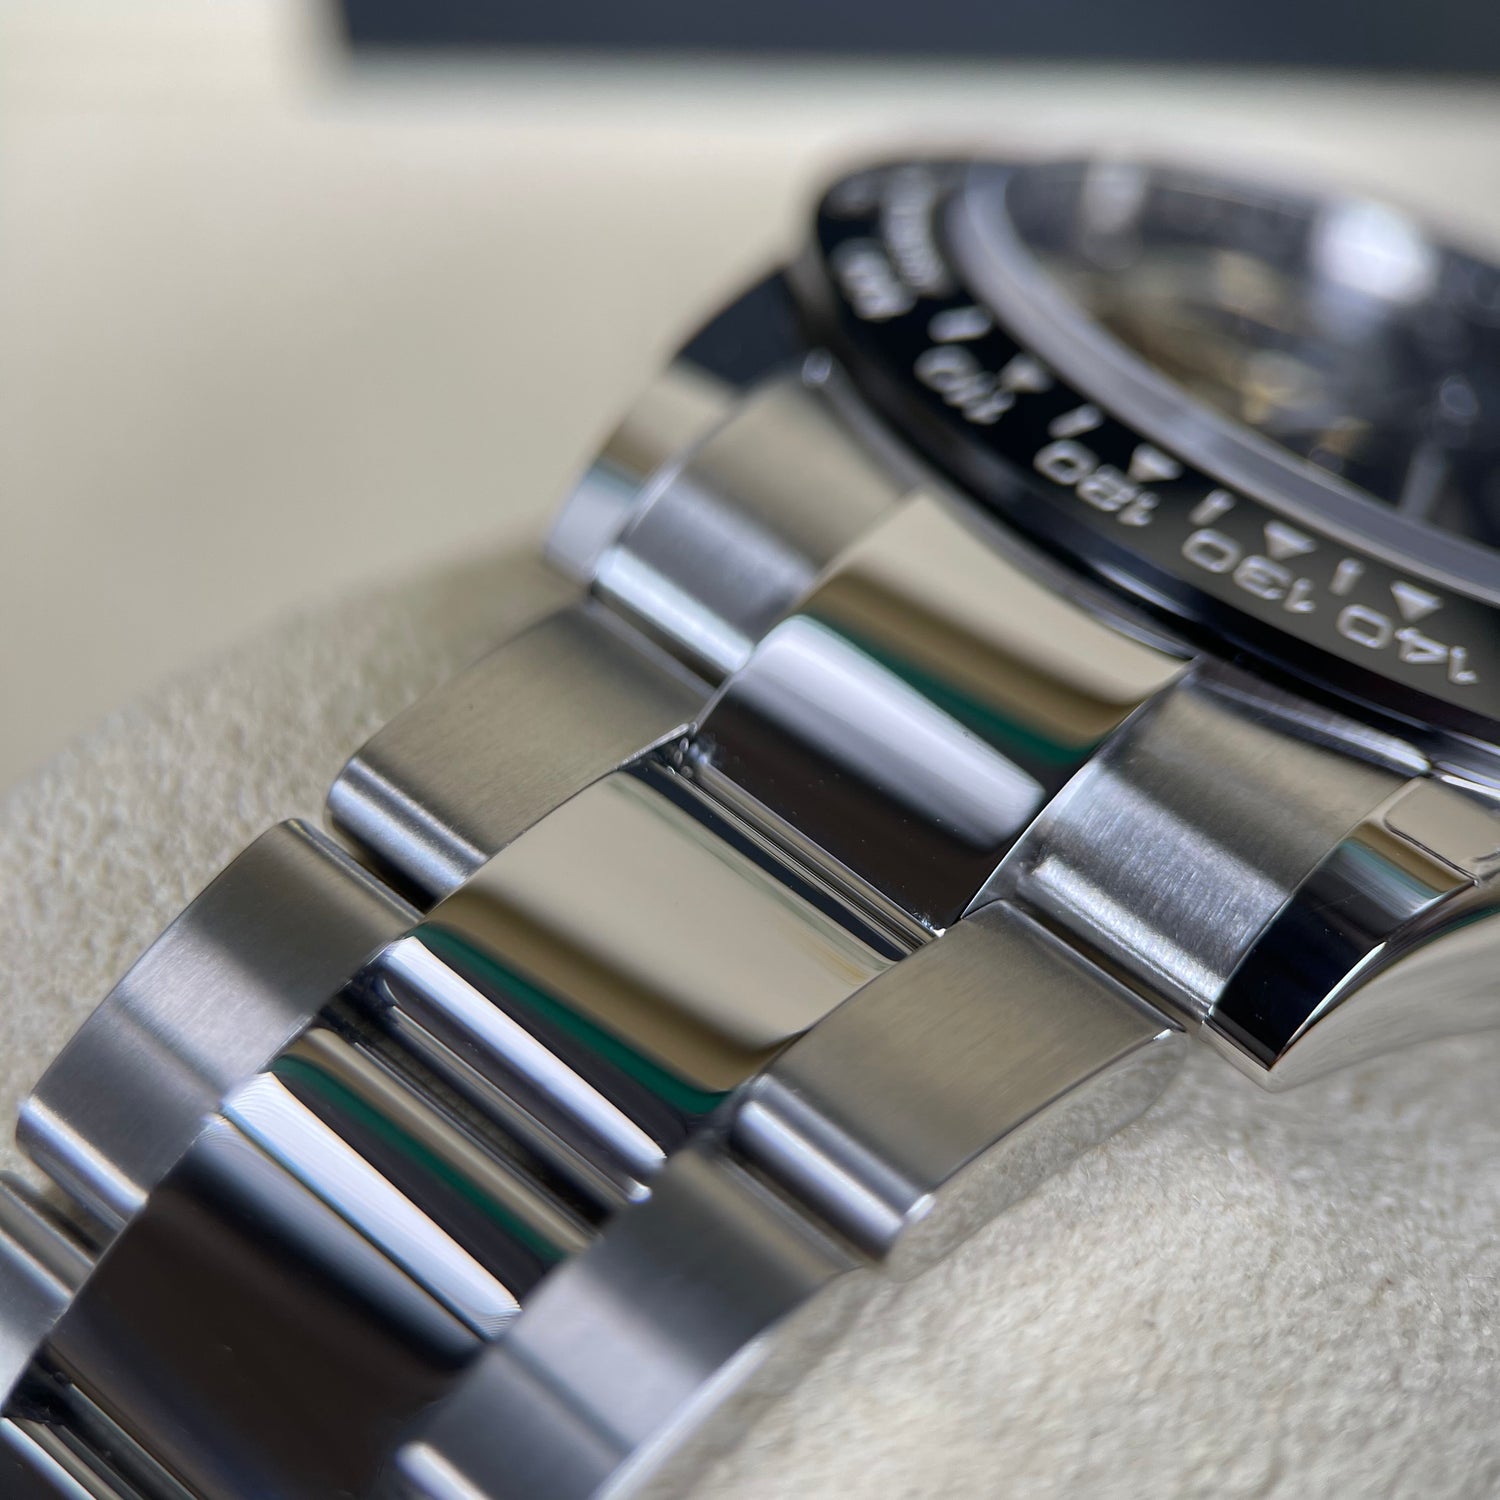 Rolex Cosmograph Daytona Ceramic Black Dial 116500LN June 2021 Brand New Watch